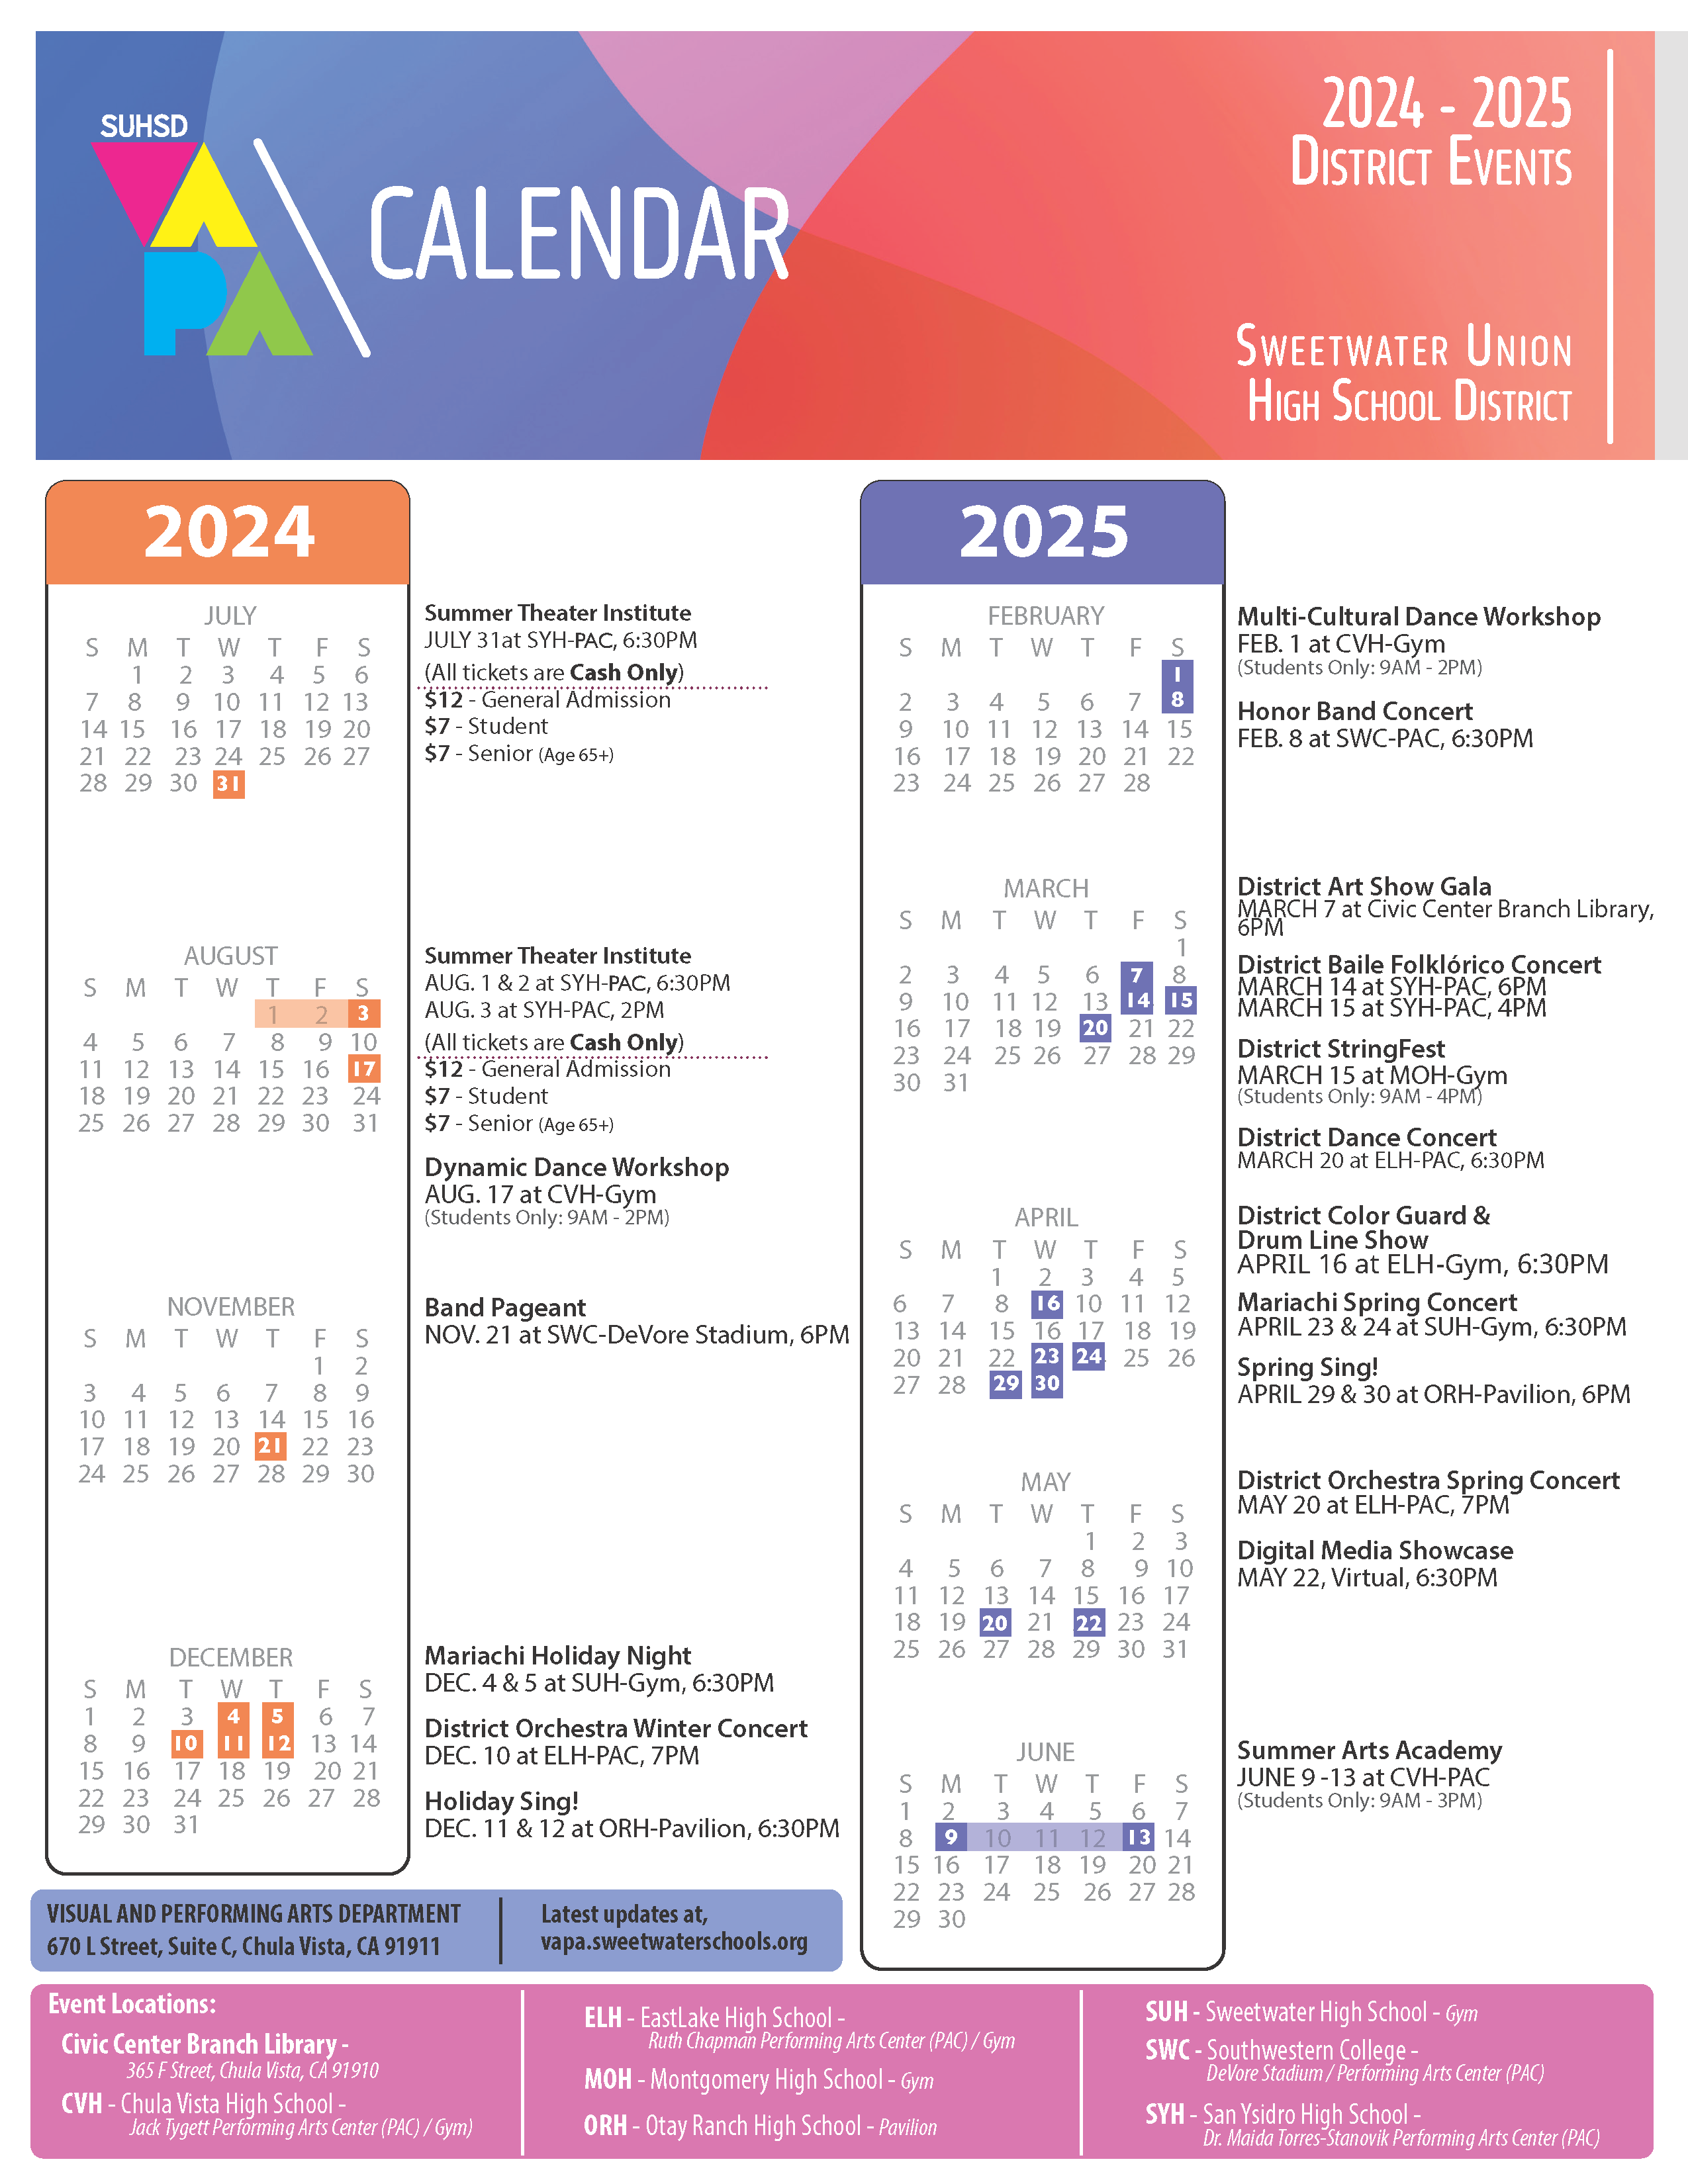 VAPA Calendar 2024-2025